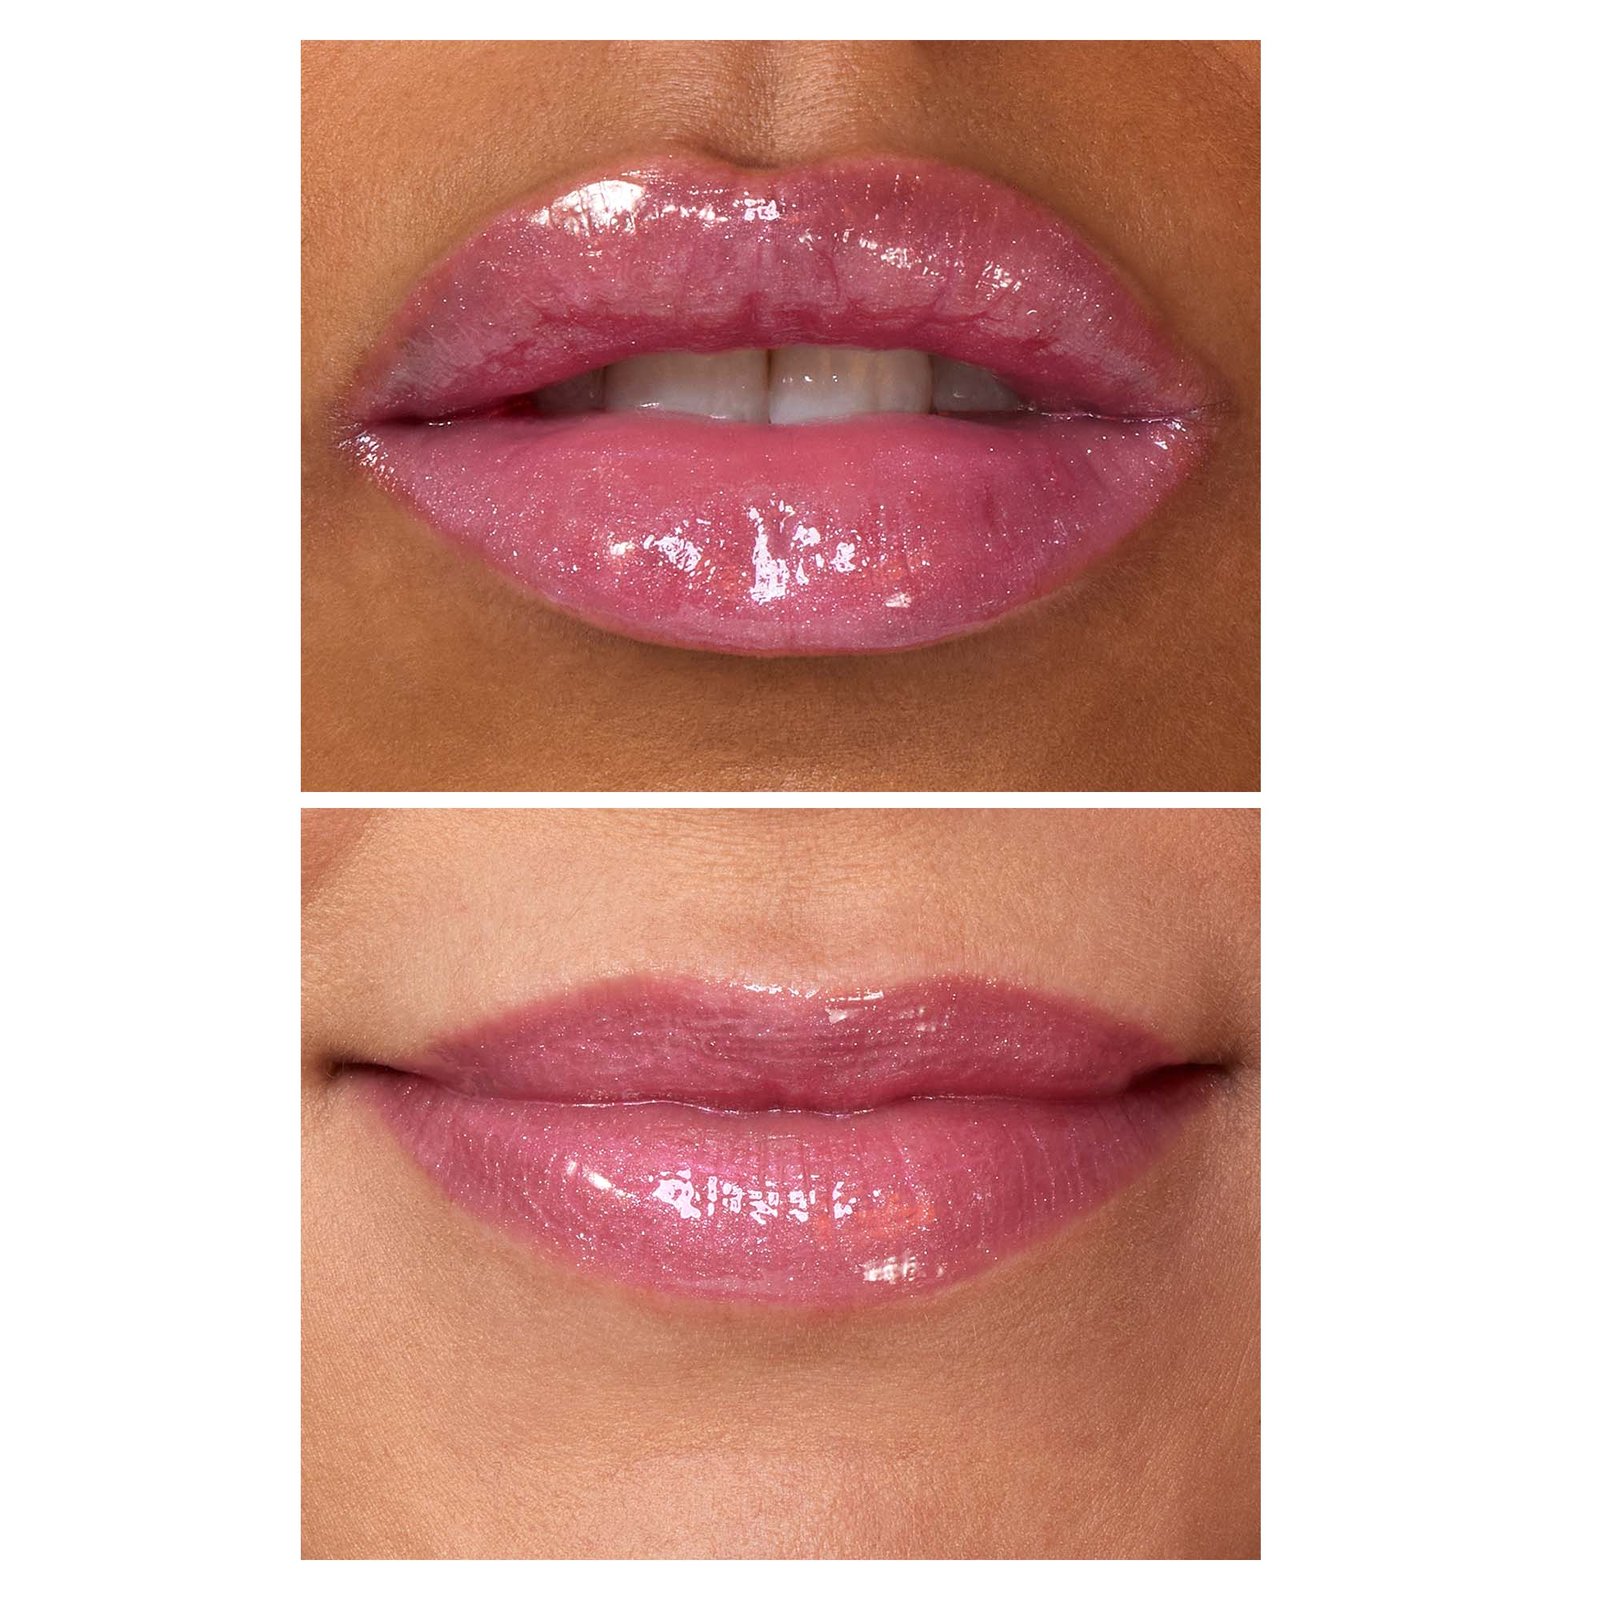 IsaDora Glossy Lip Treat Pink Pearl 13 ml